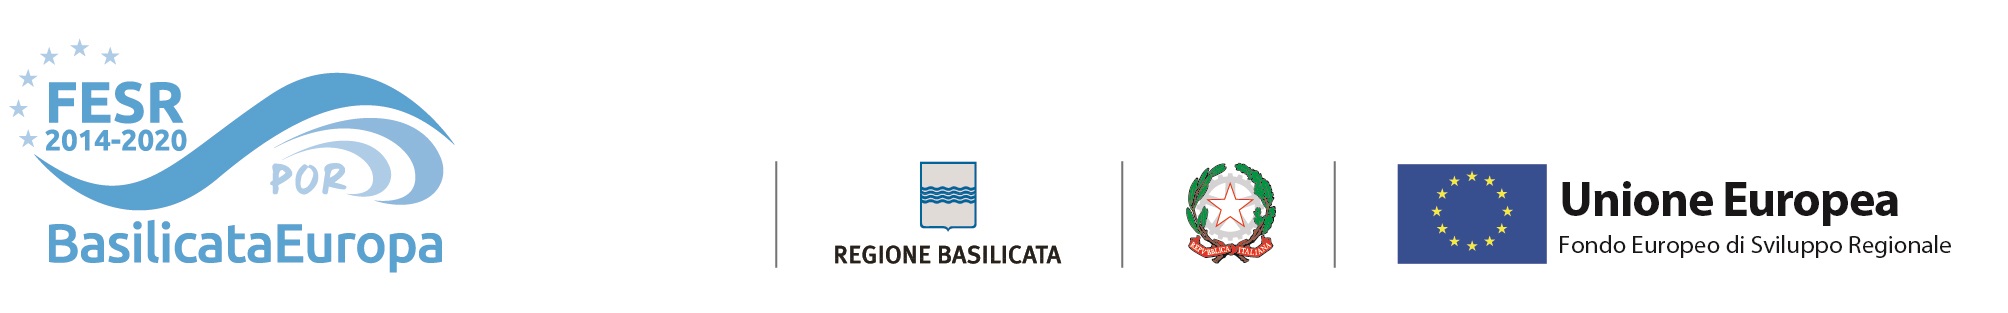 FESR 2014-2020 POR BasilicataEuropa